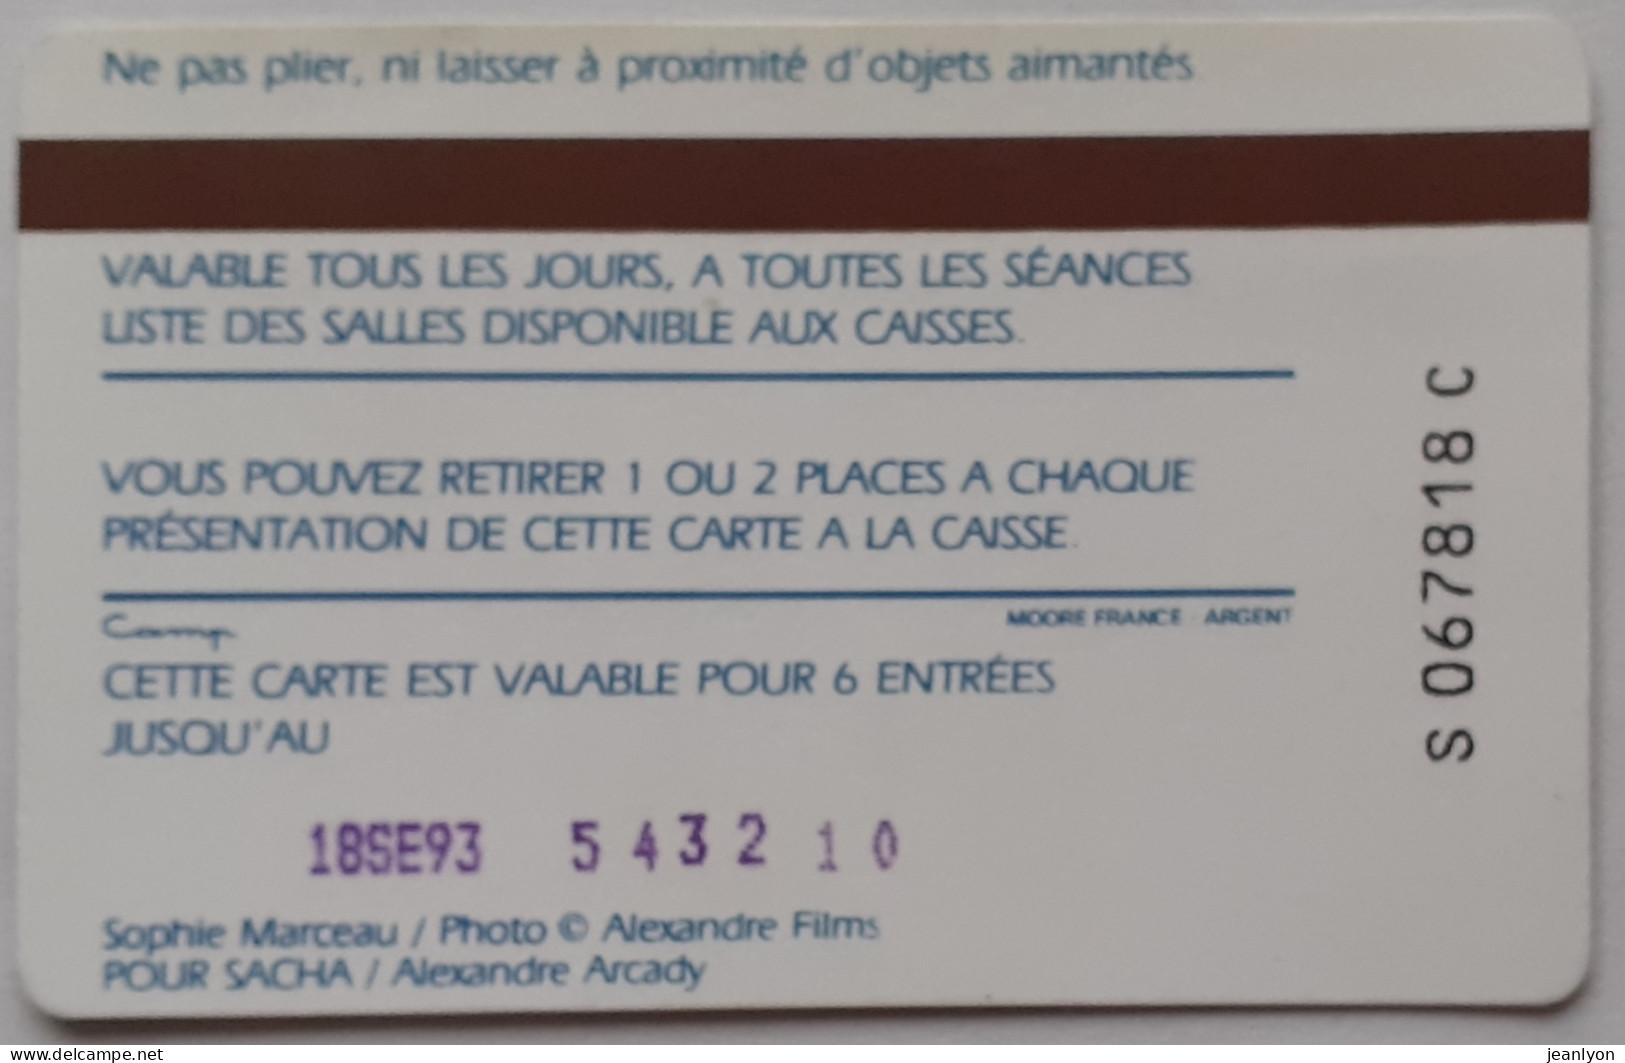 CINEMA - Sophie MARCEAU / Film POUR SACHA / Violon - Carte Souple UGC Privilege 2 - Movie Cards